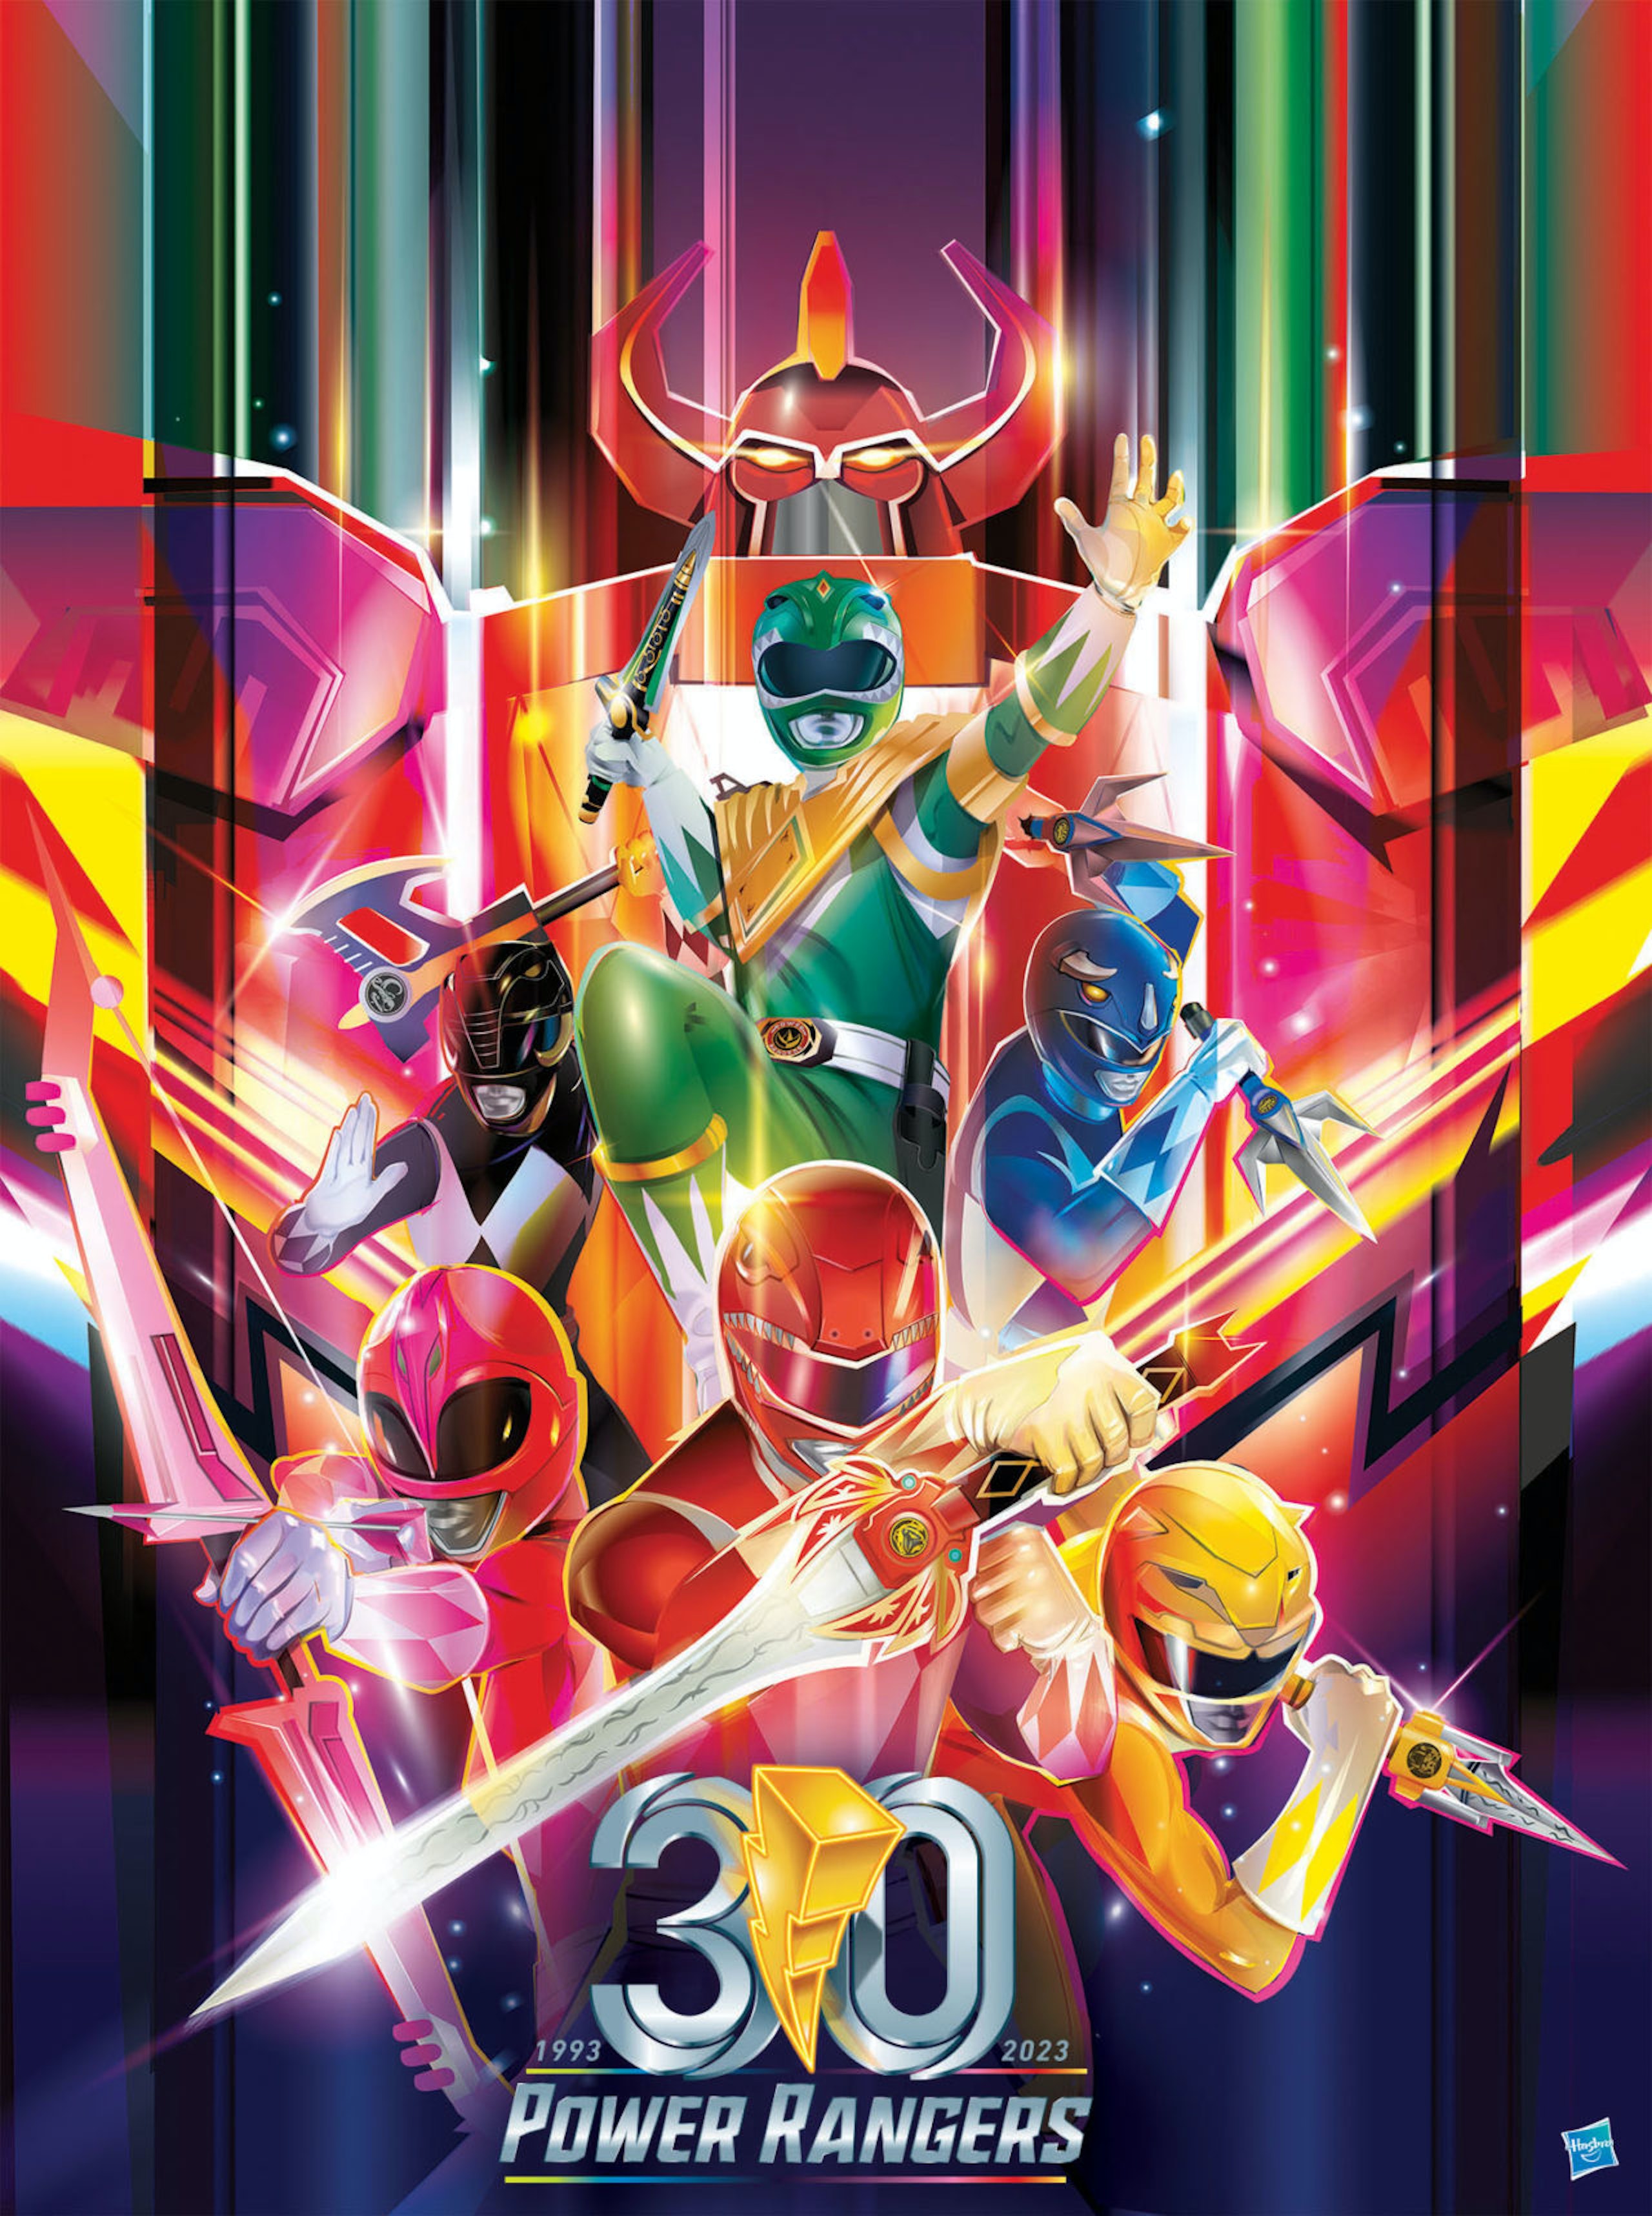 Mighty Morphin Power Rangers 30th Anniversary r/iWallpaper